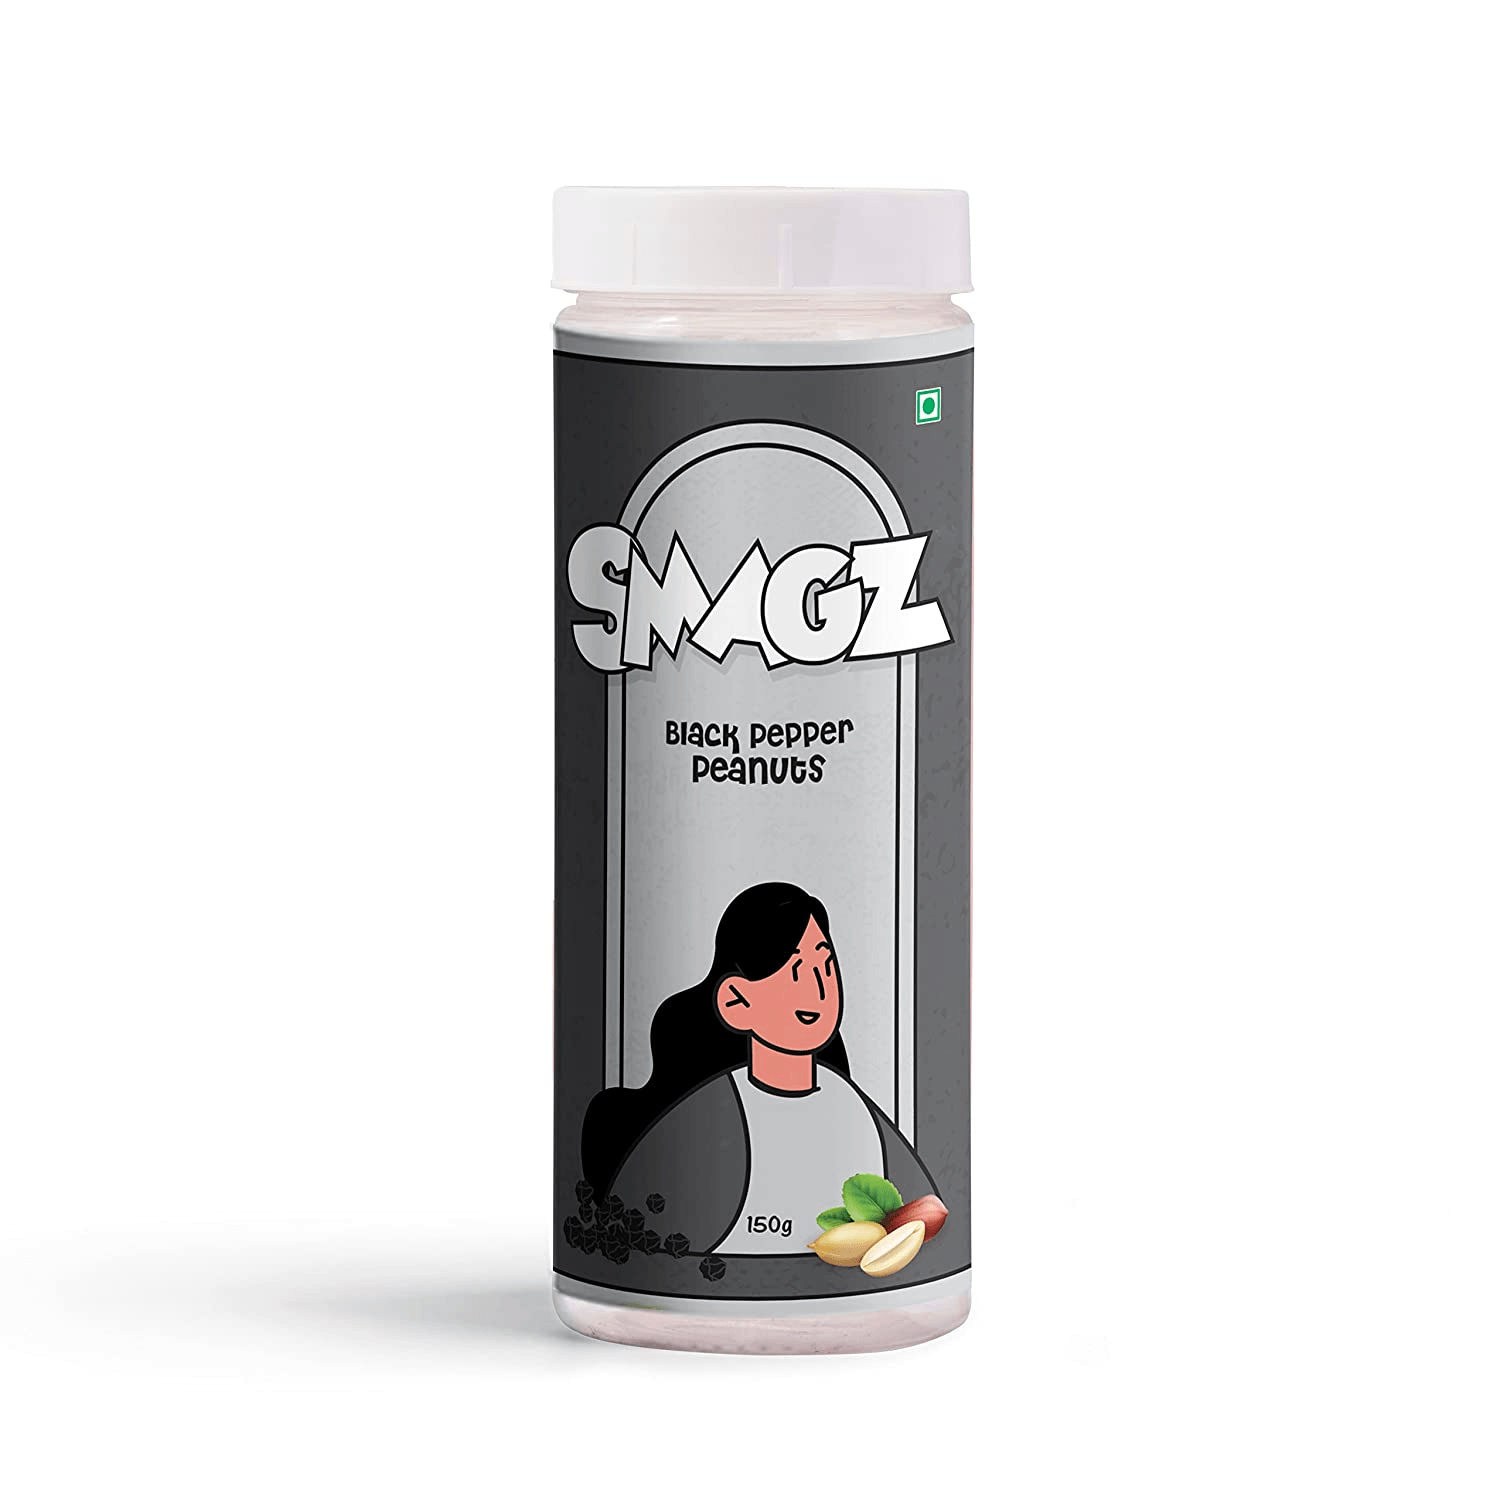 SMAGZ Black Pepper Peanut Healthy Namkeen and Snacks